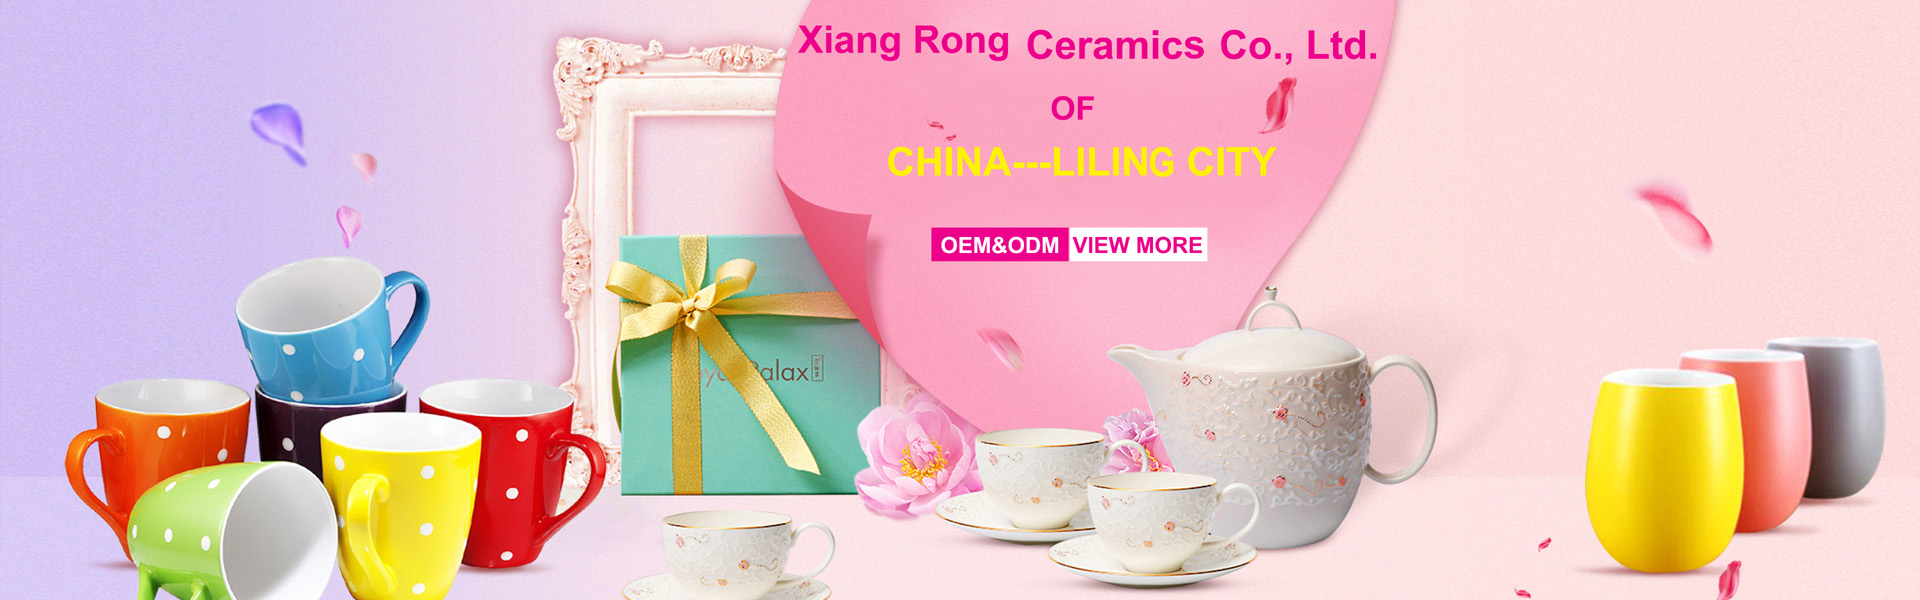 xiangrong Ceramics Co., Ltd